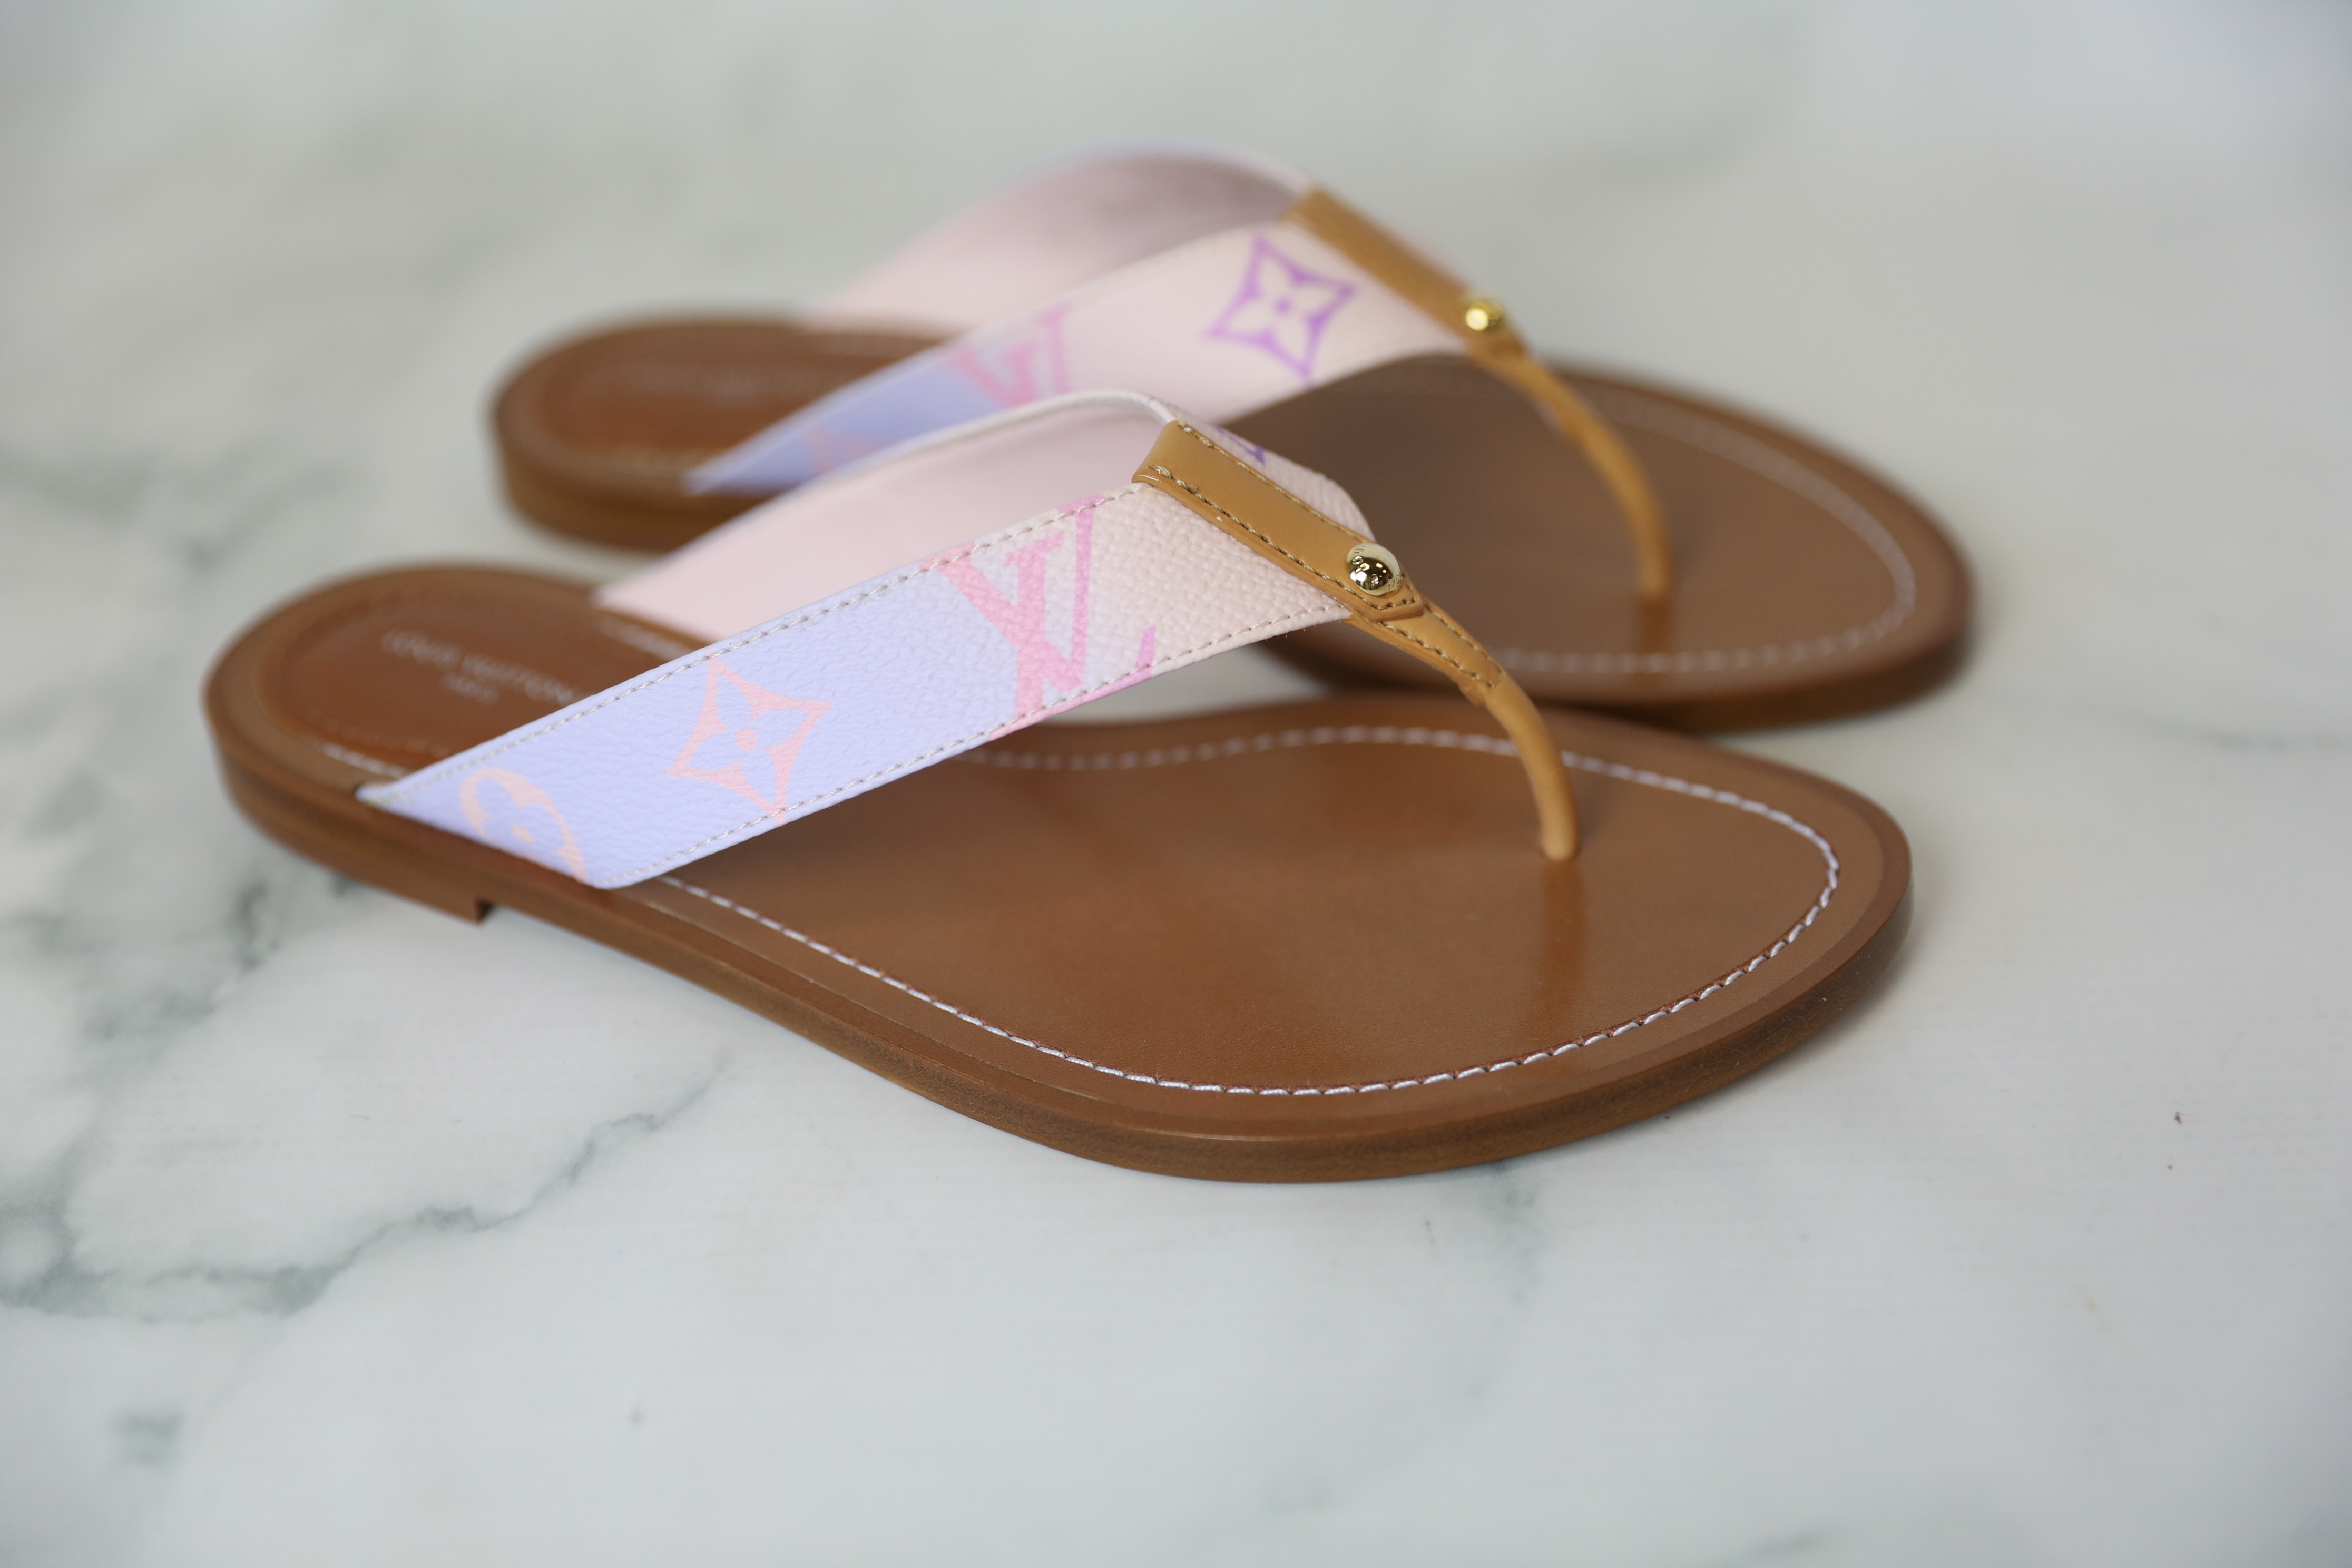 Louis Vuitton Sunrise Pastel Flat Thong Sandals, Size 36, New in Dustbag  WA001 - Julia Rose Boston